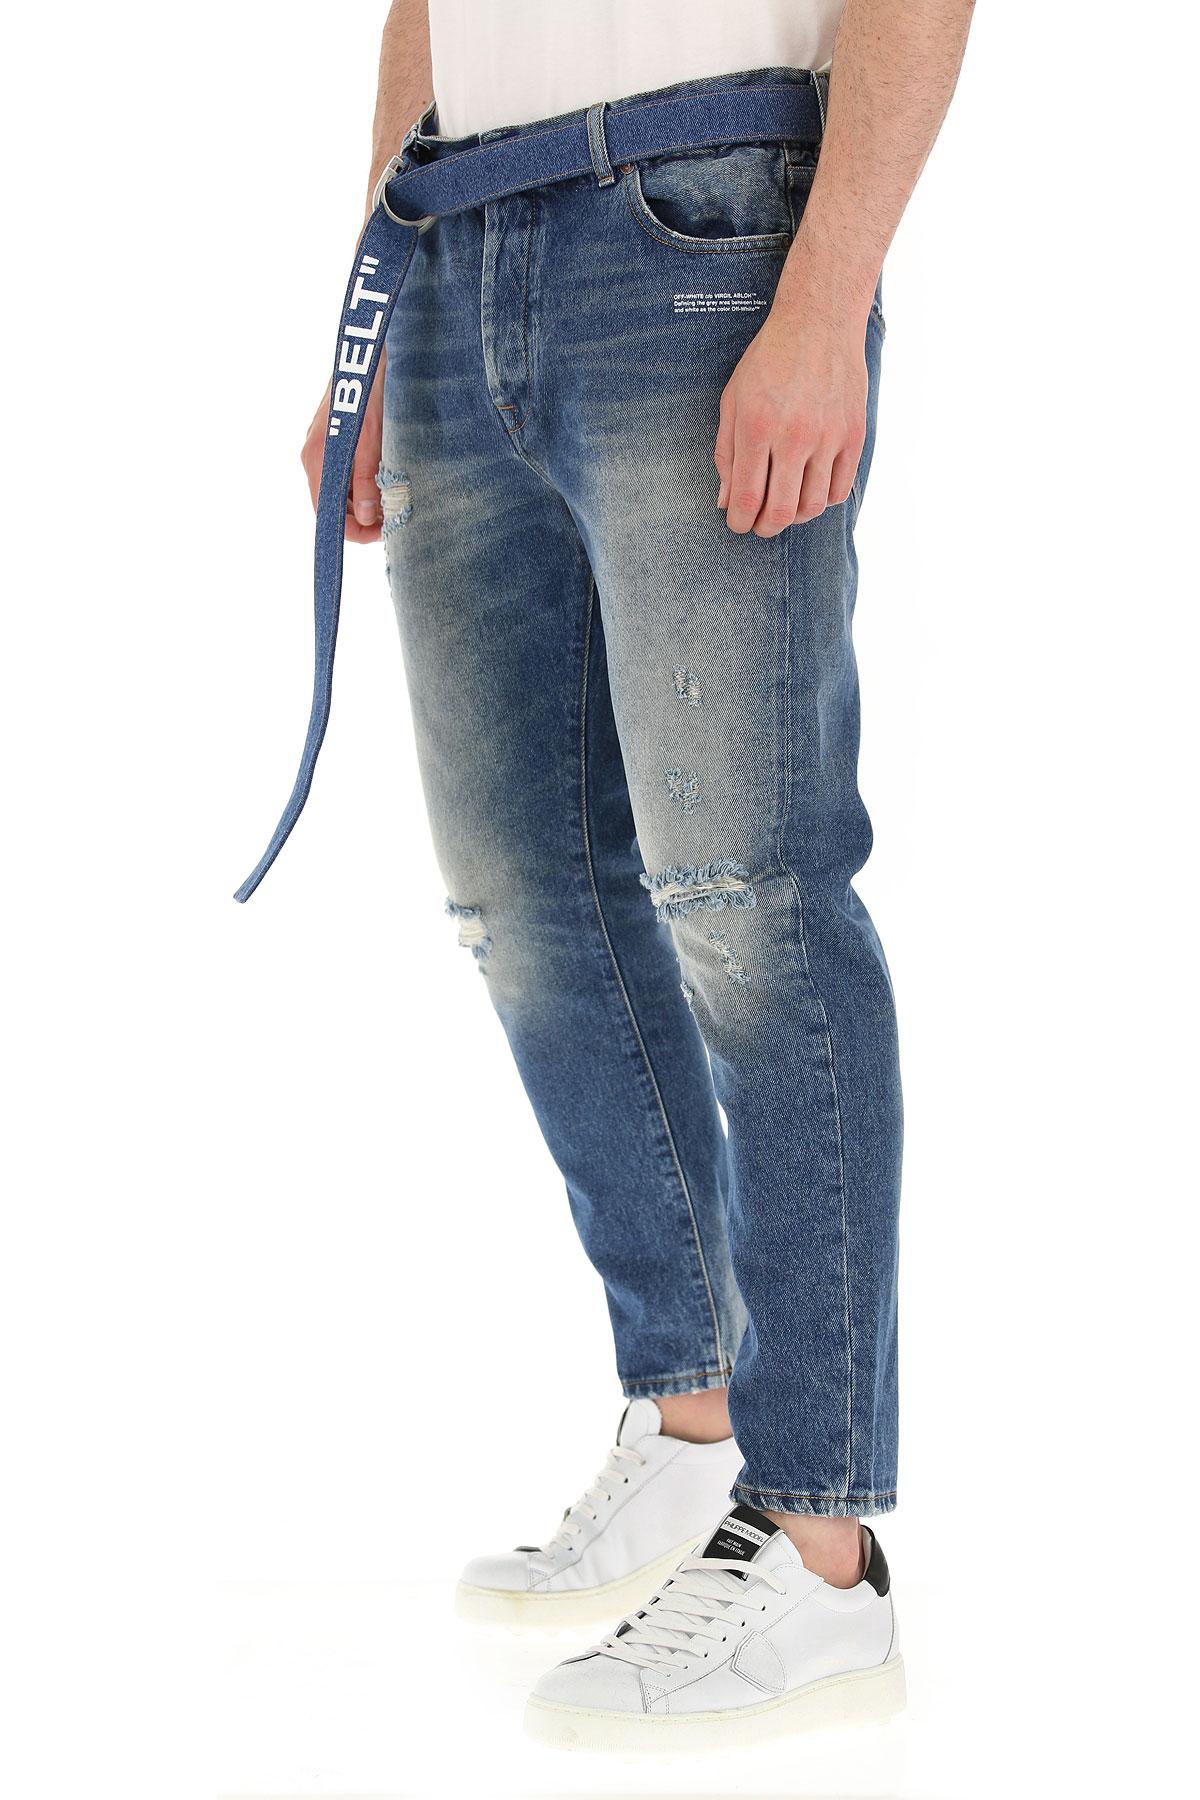 Off-White c/o Virgil Abloh Jeans On Sale in Blue for Men - Lyst